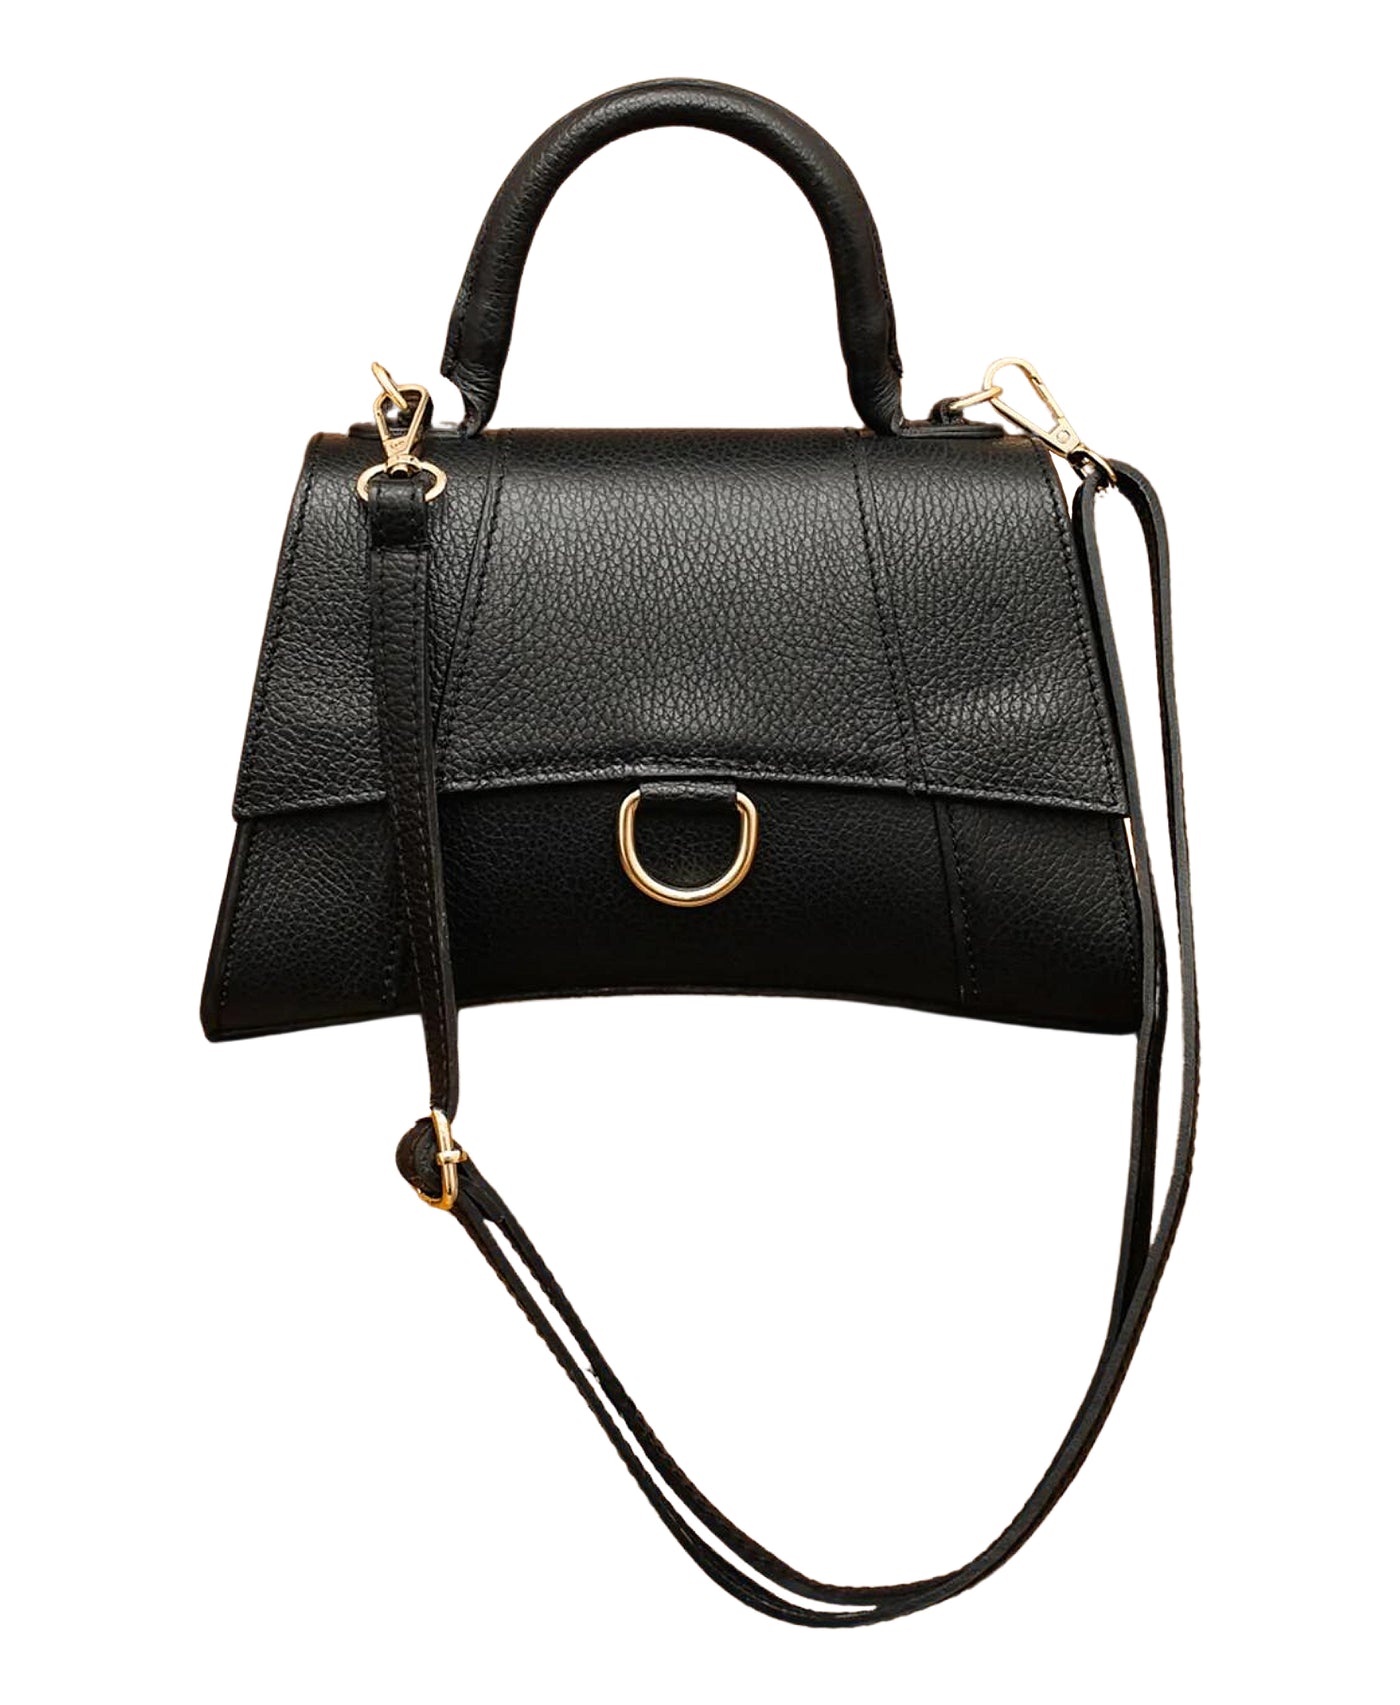 Pebbled Leather Top Handle Handbag w/ Strap image 1